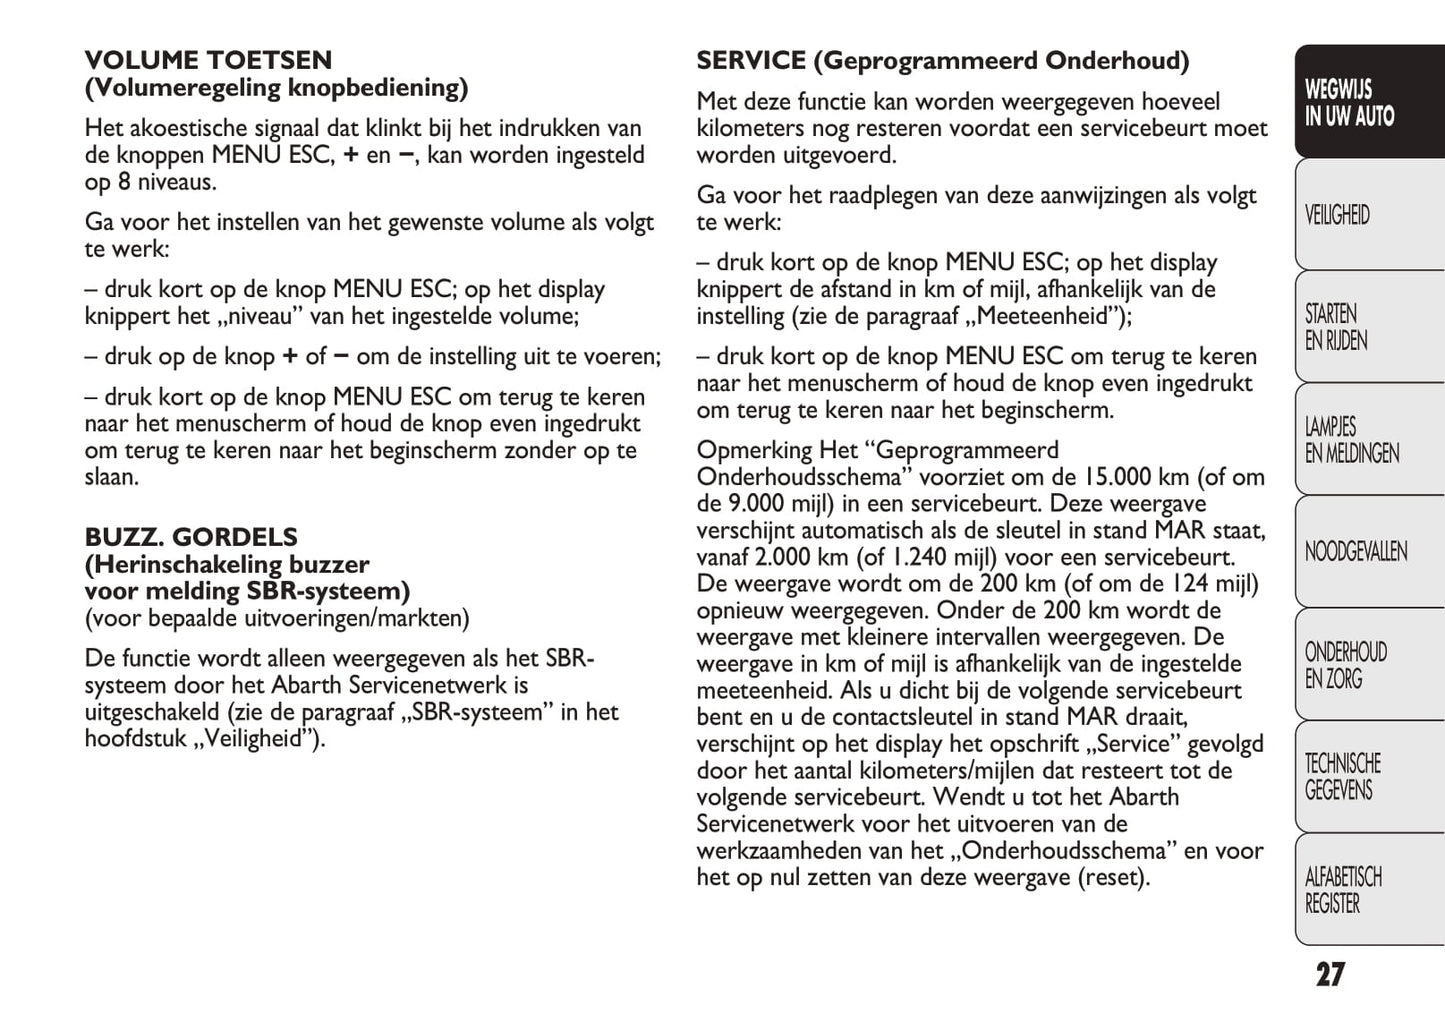 2010-2014 Abarth Punto Evo Gebruikershandleiding | Nederlands